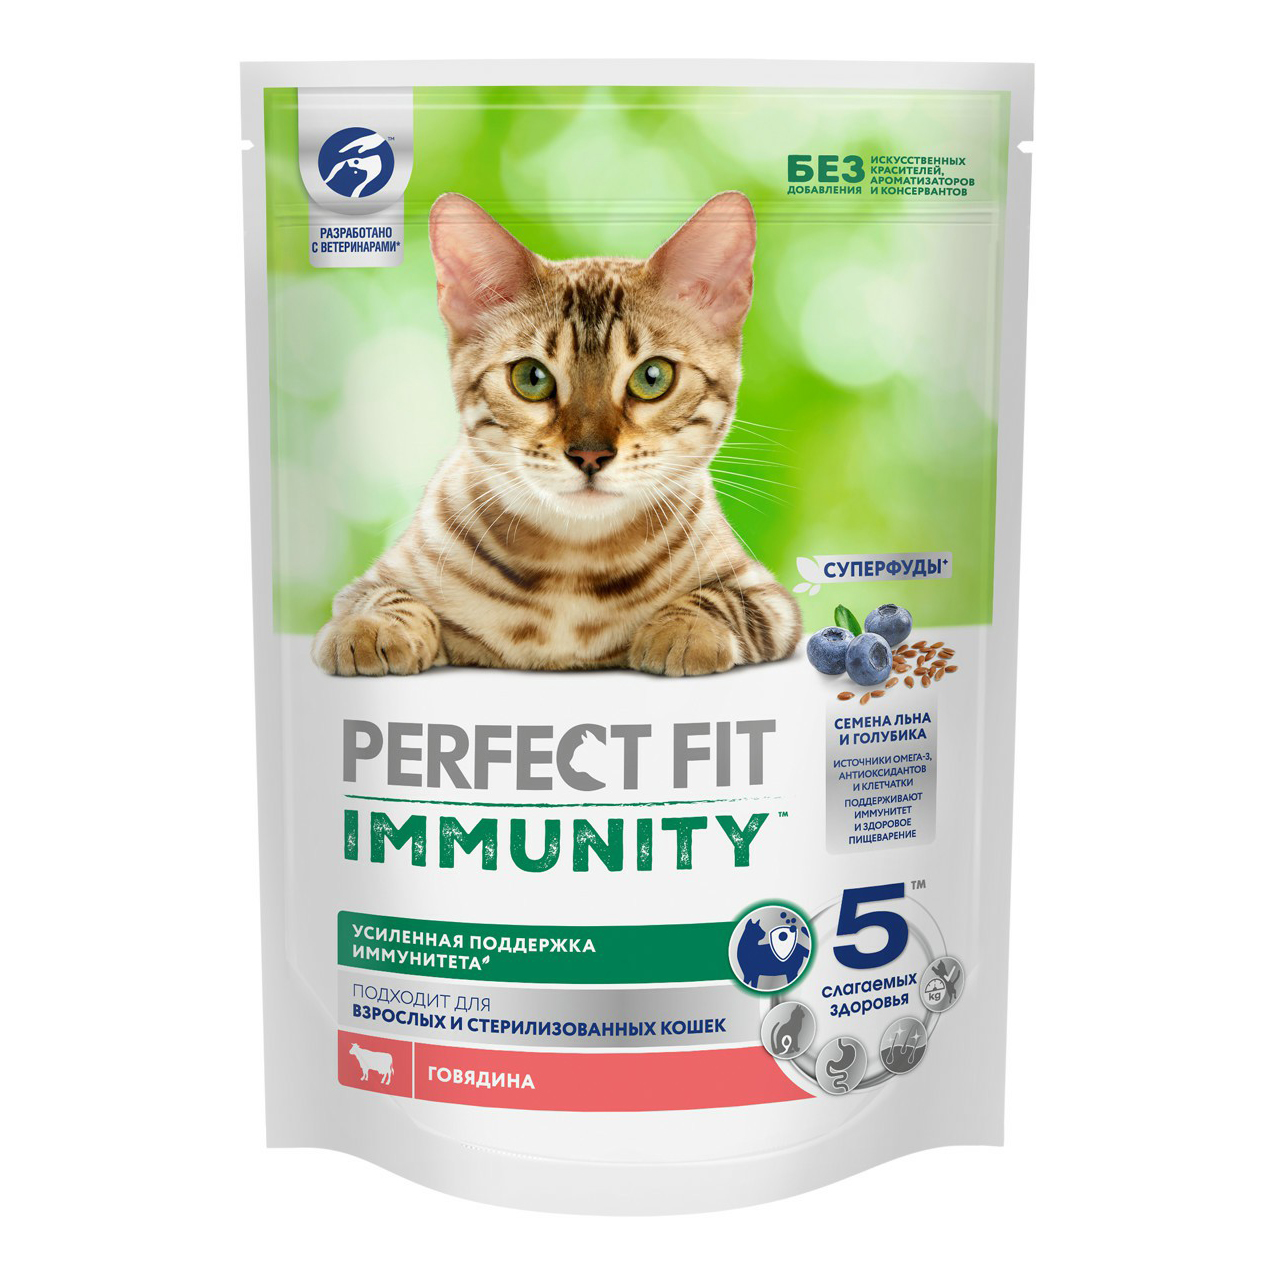 Сухой корм для кошек Perfect Fit Immunity говядина, семена льна, голубика 580 г